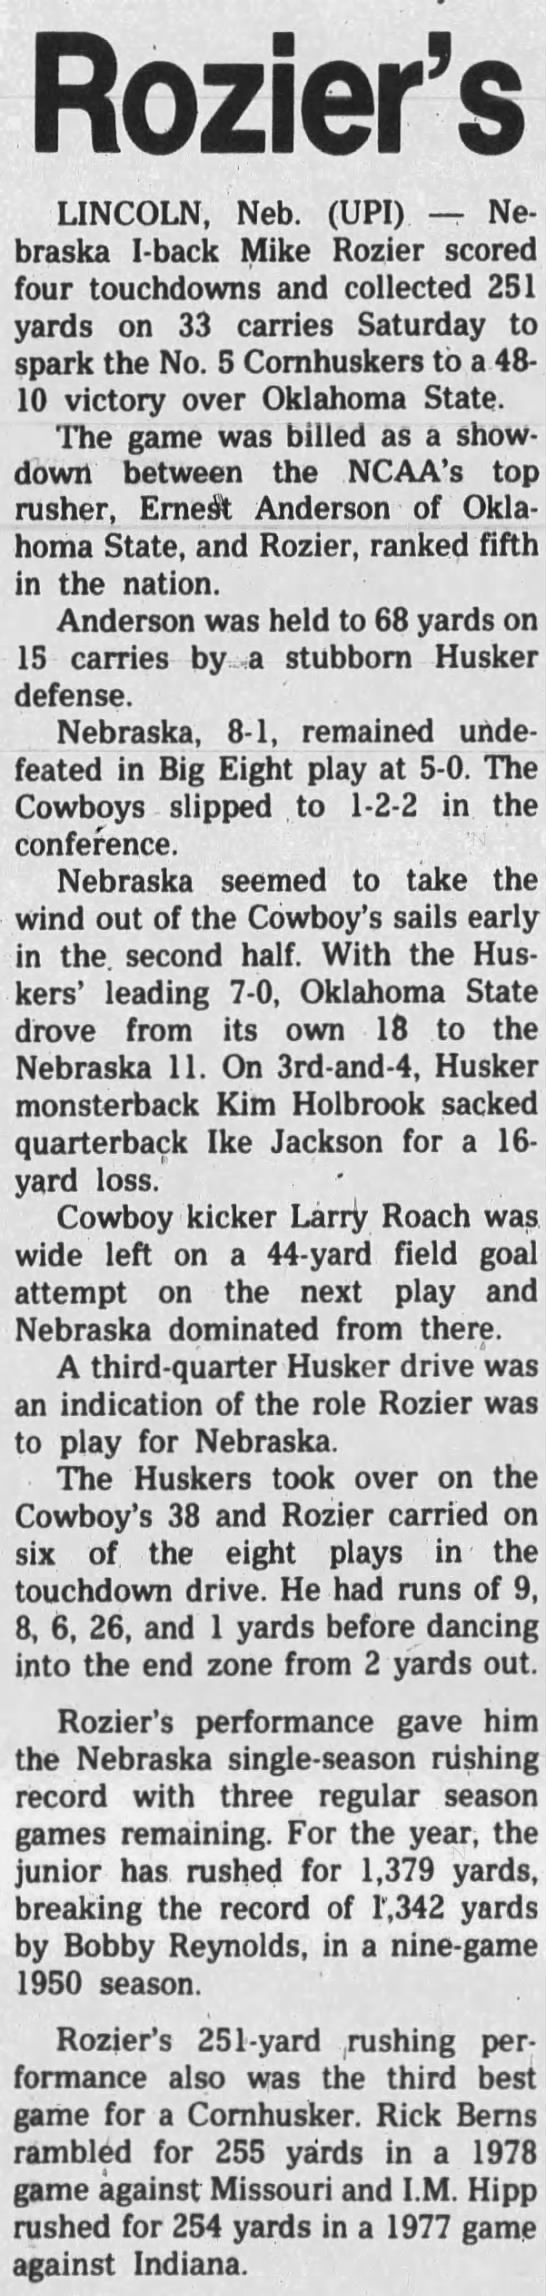 1982 Nebraska-Oklahoma State football, UPI - 